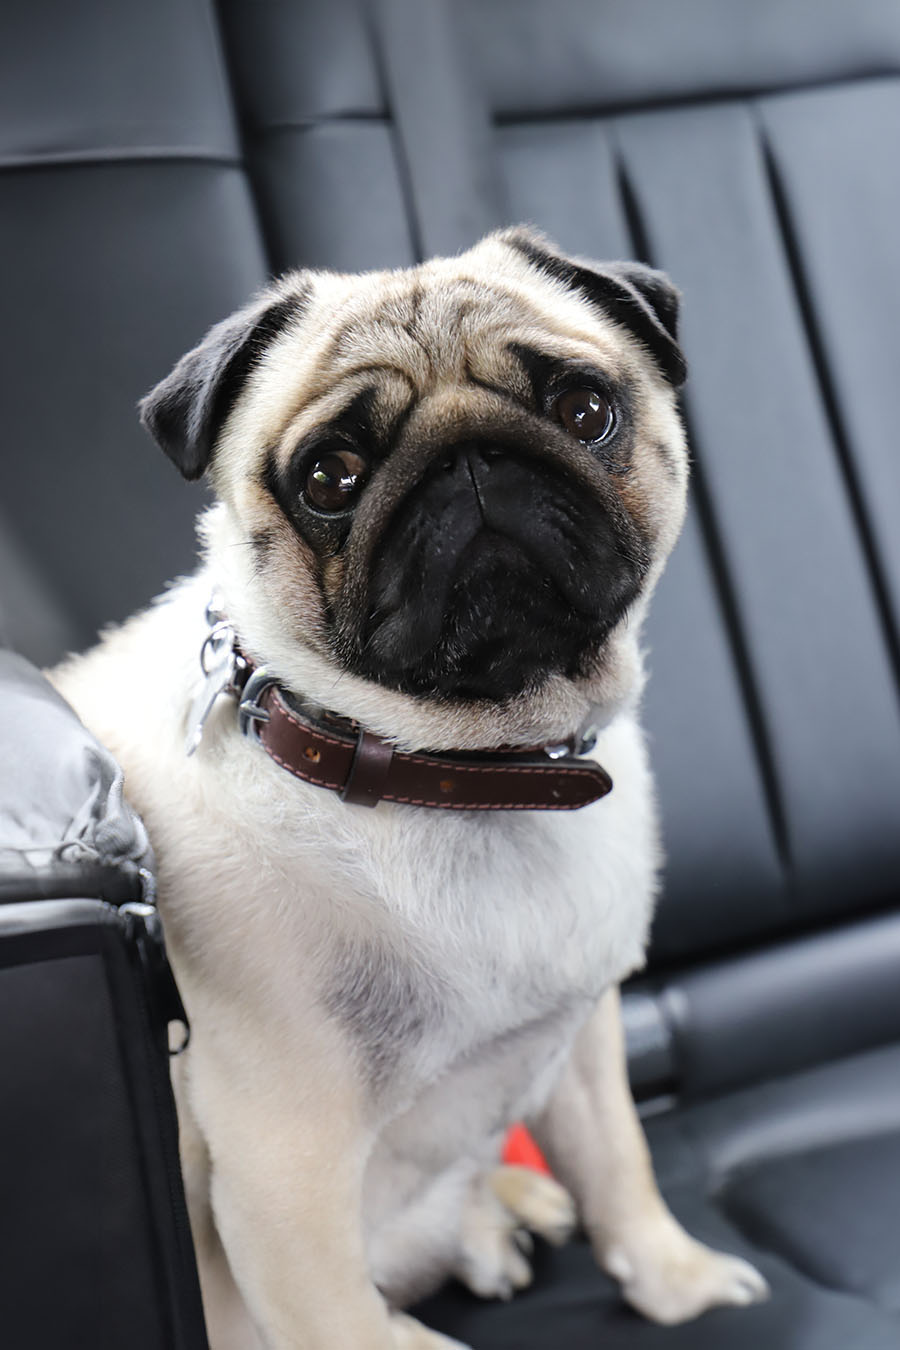 Lex, a small Pug dog, on the back seat of a car. ©2020 Mathieu Improvisato